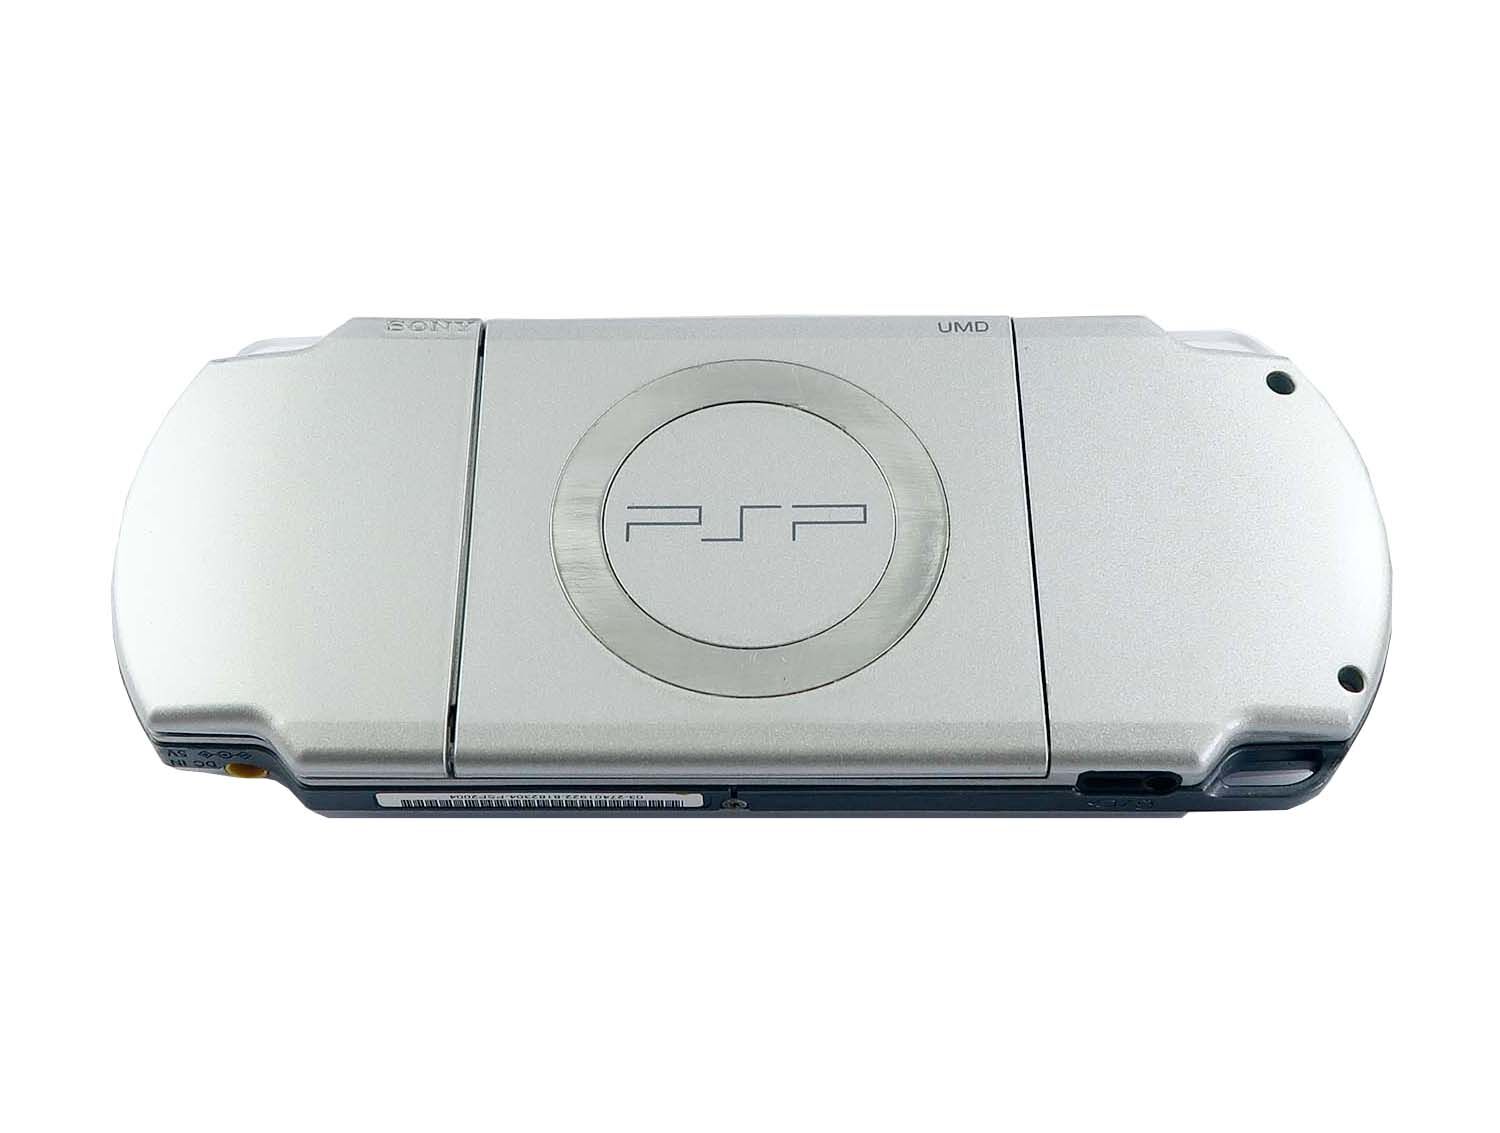 Sony Playstation Portable - Sony PSP Silber/Silver